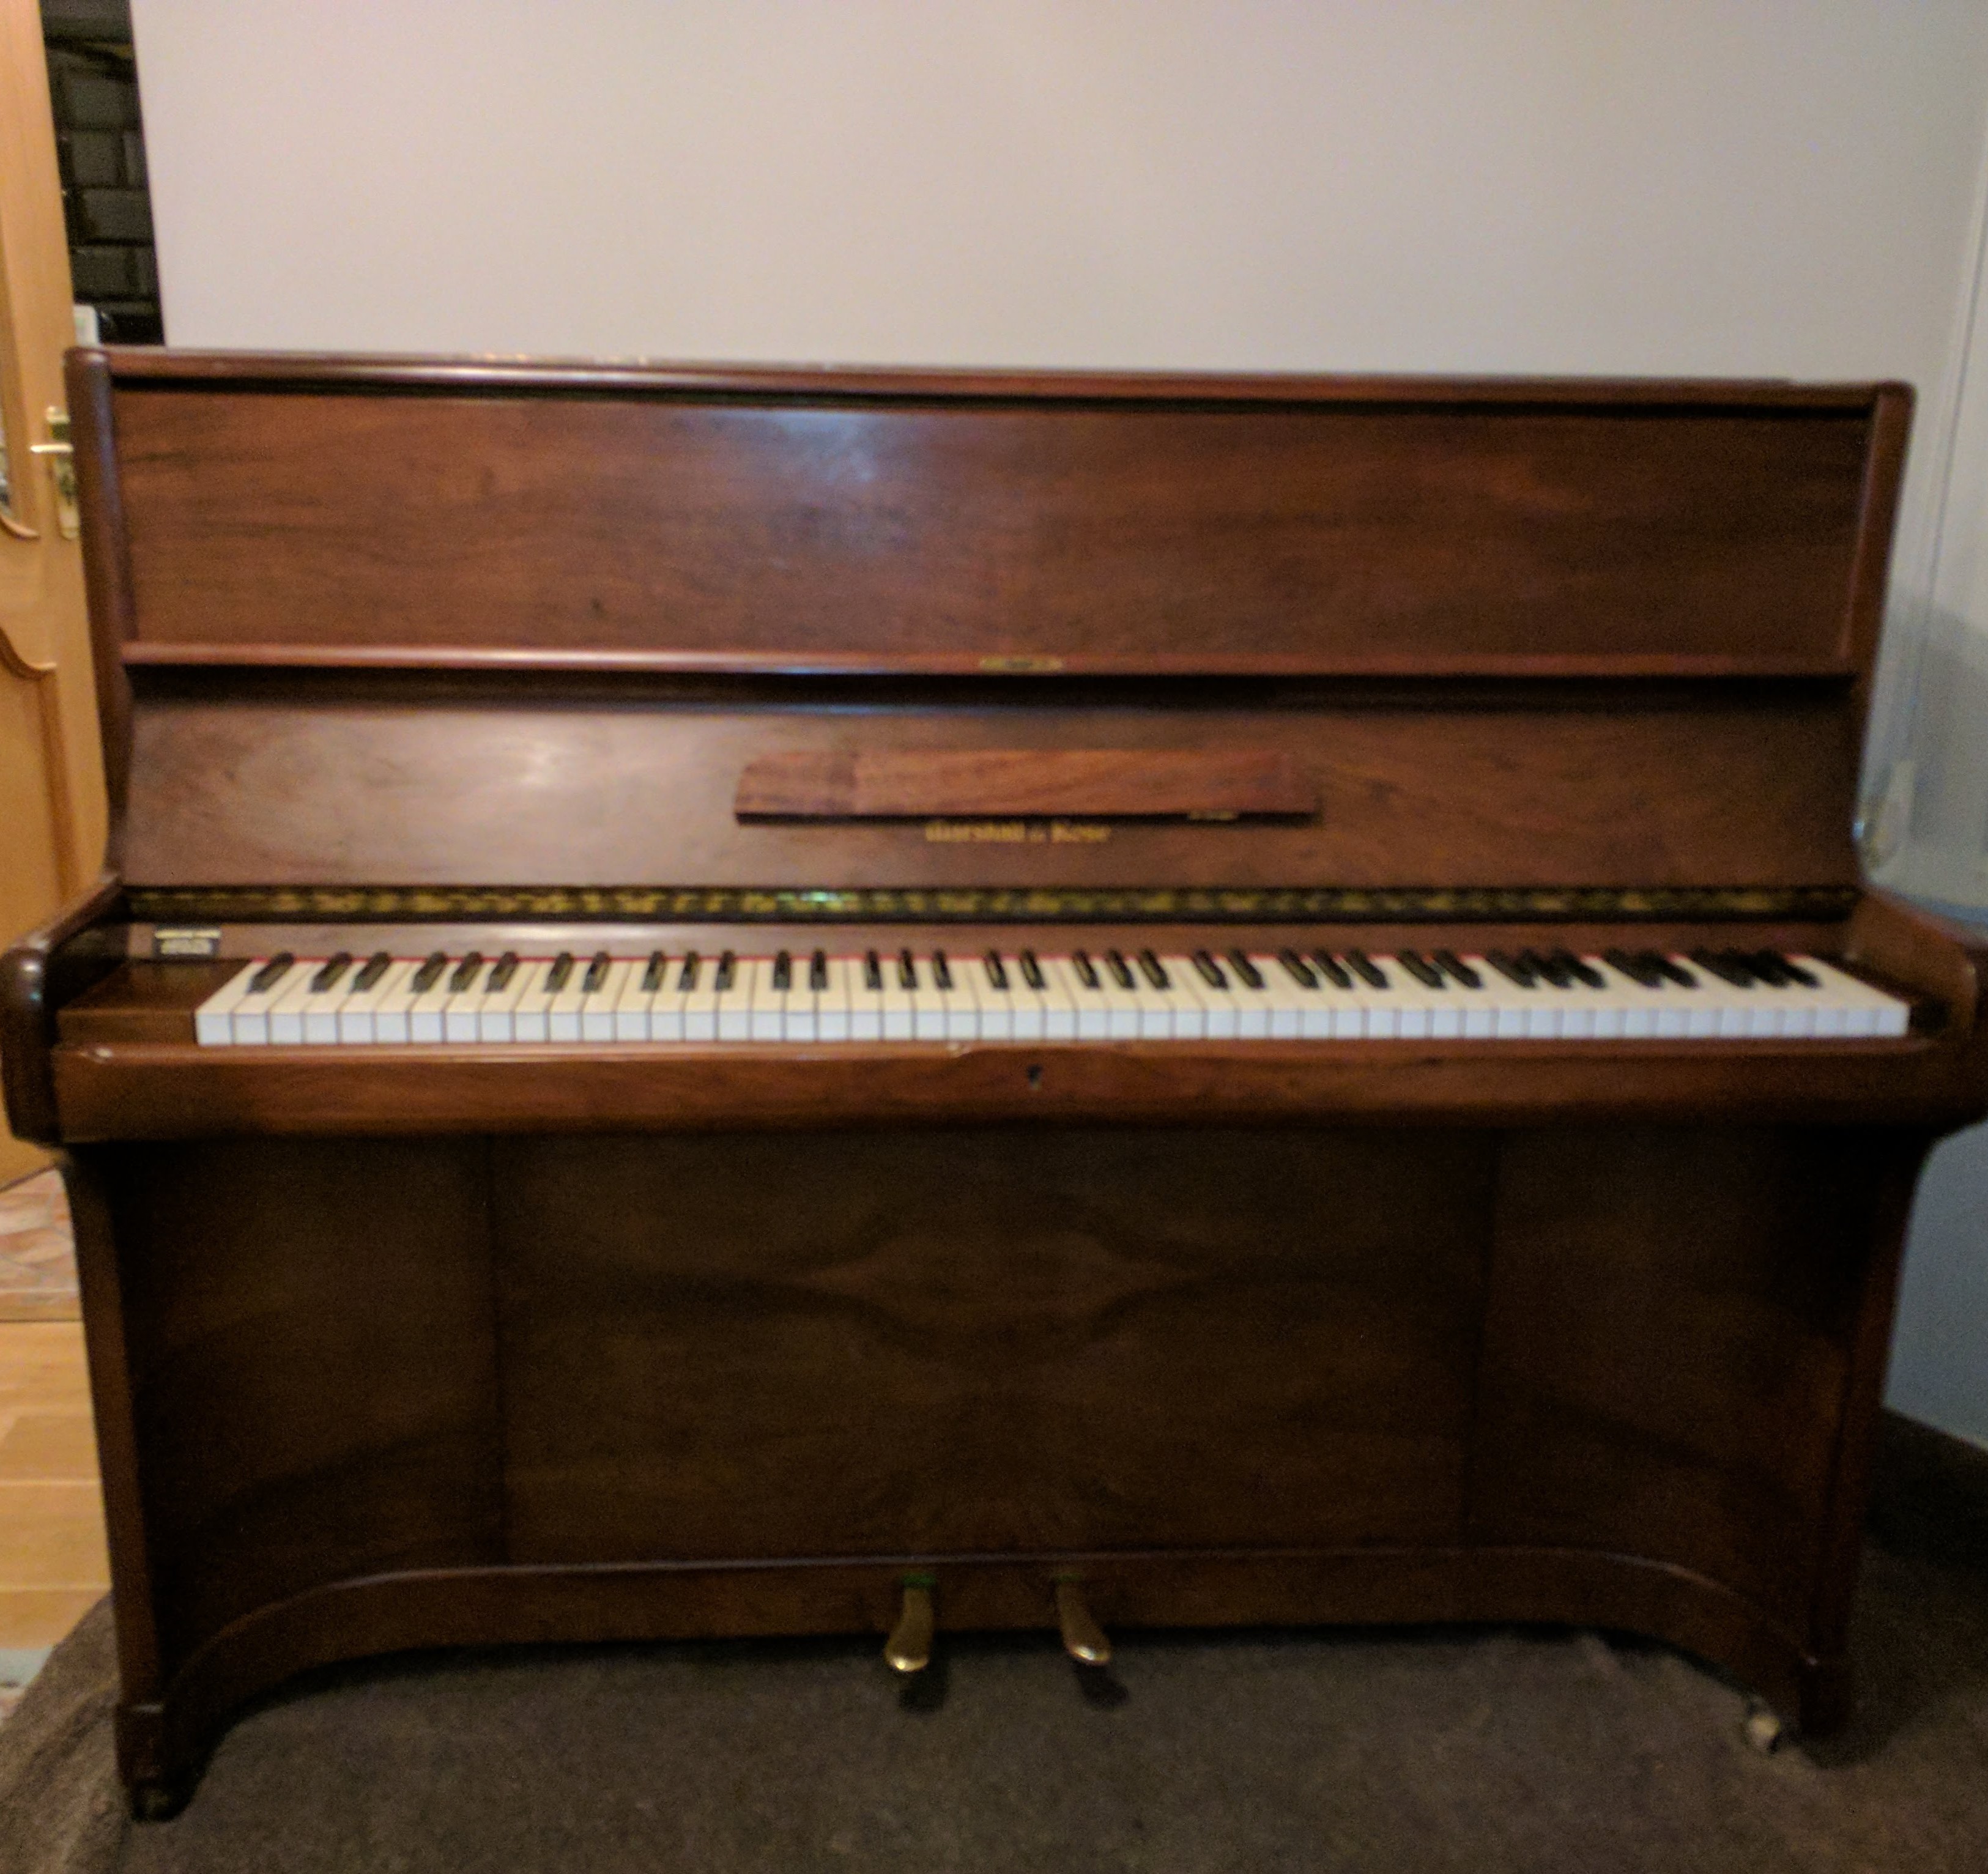 Marshall and Rose Piano - 1930